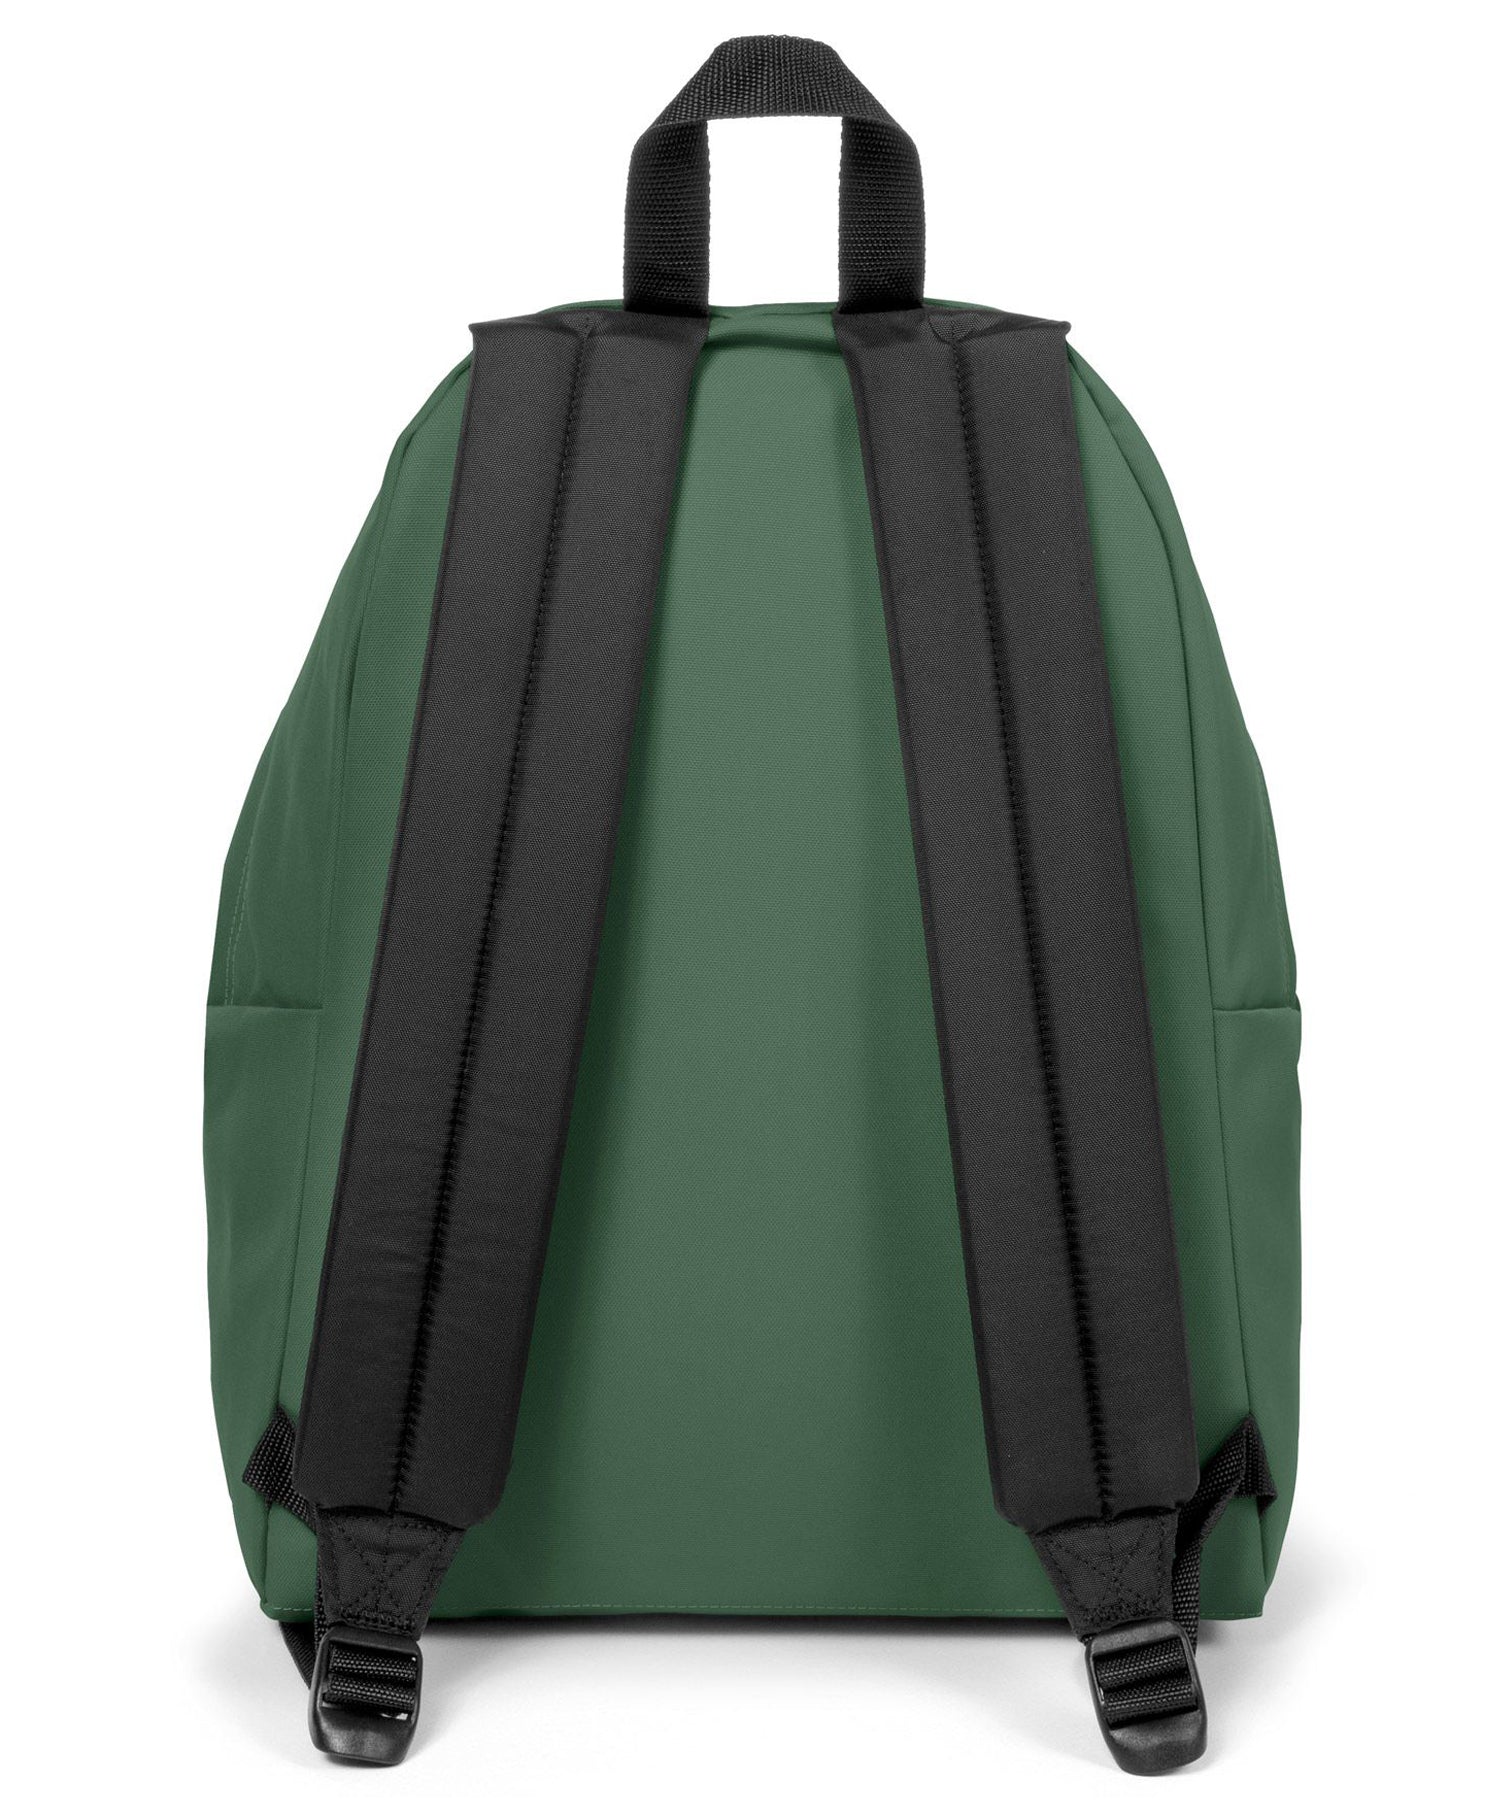 eastpak-mochilas-padded-pak_r-color-verde-oscuro-bolsillo-exterior-calidad-durabilidad-aseguradas-24-litros